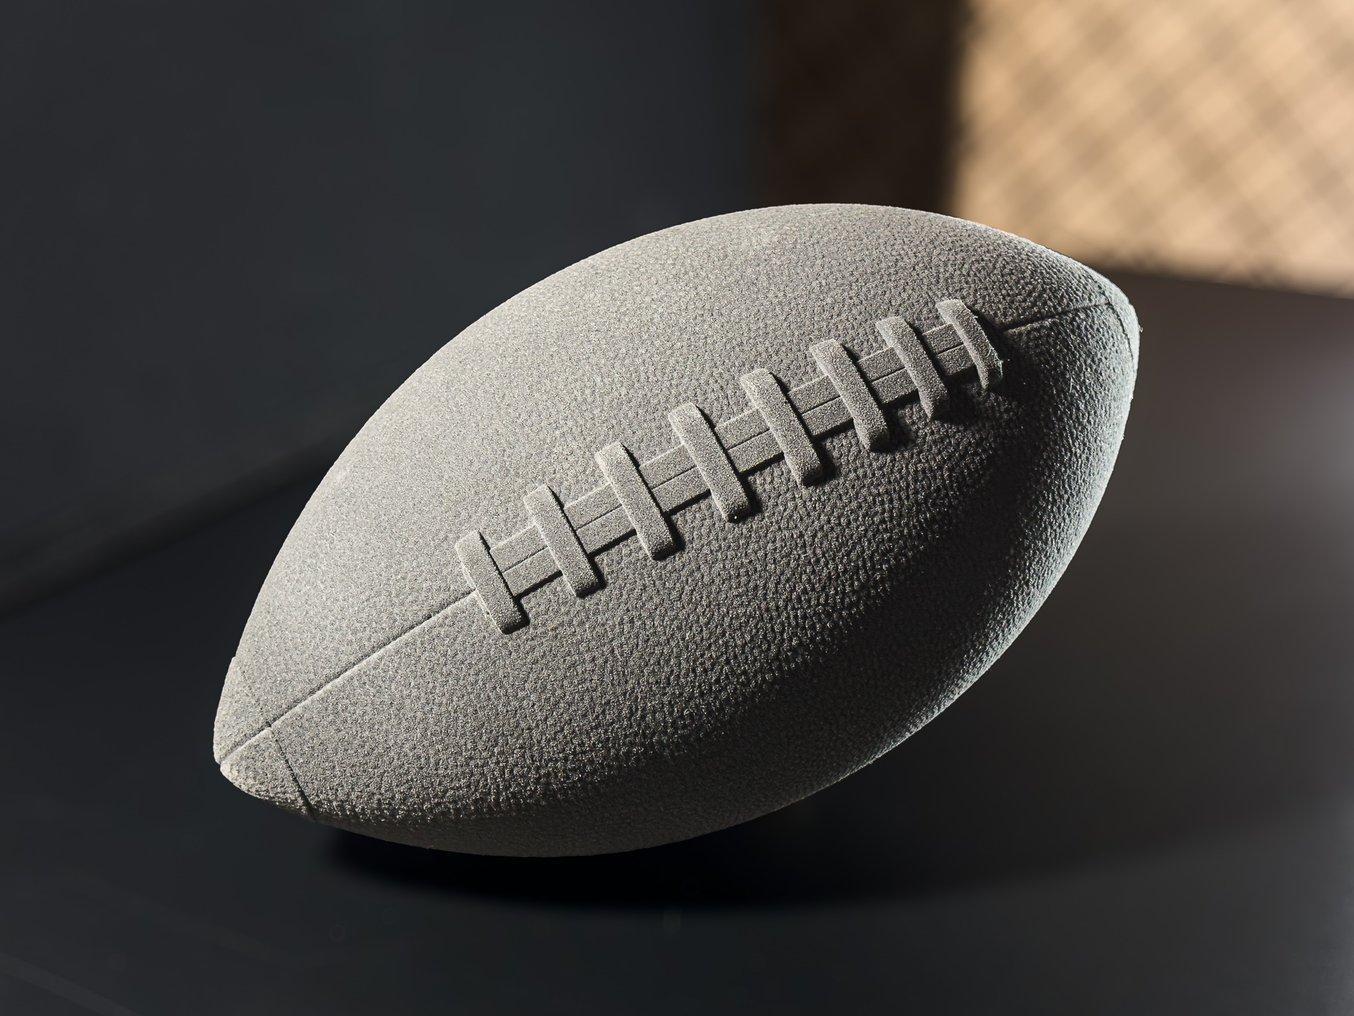 Dark grey 3D printed football on black background